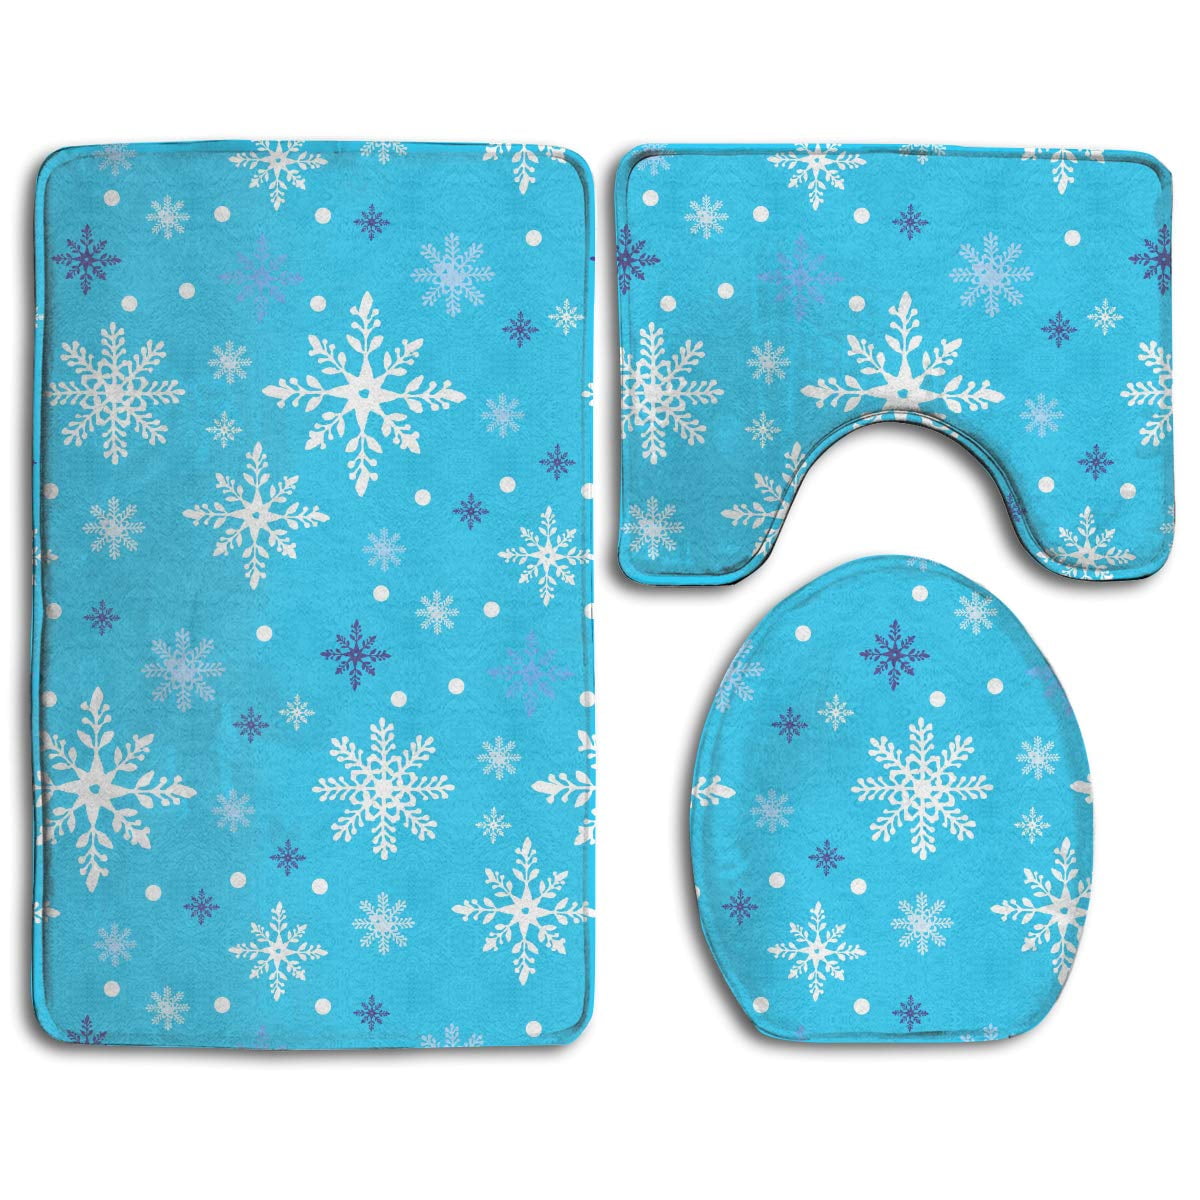 CHAPLLE Blue Christmas Snowflakes 3 Piece Bathroom Rugs Set Bath Rug ...